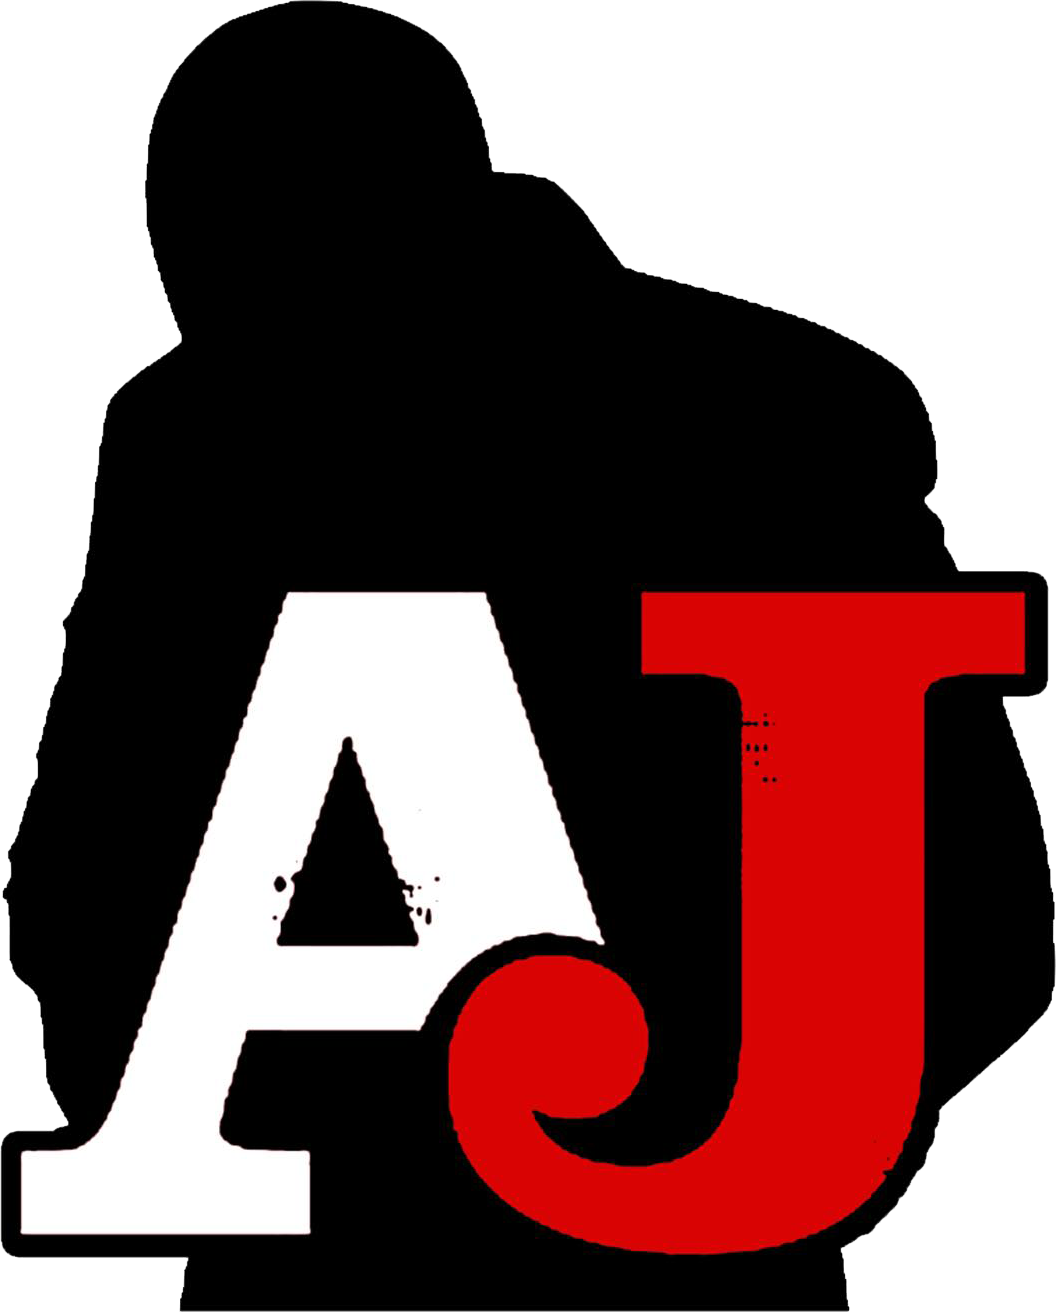 The Aj Show Live - A/j Jackson (1056x1312)